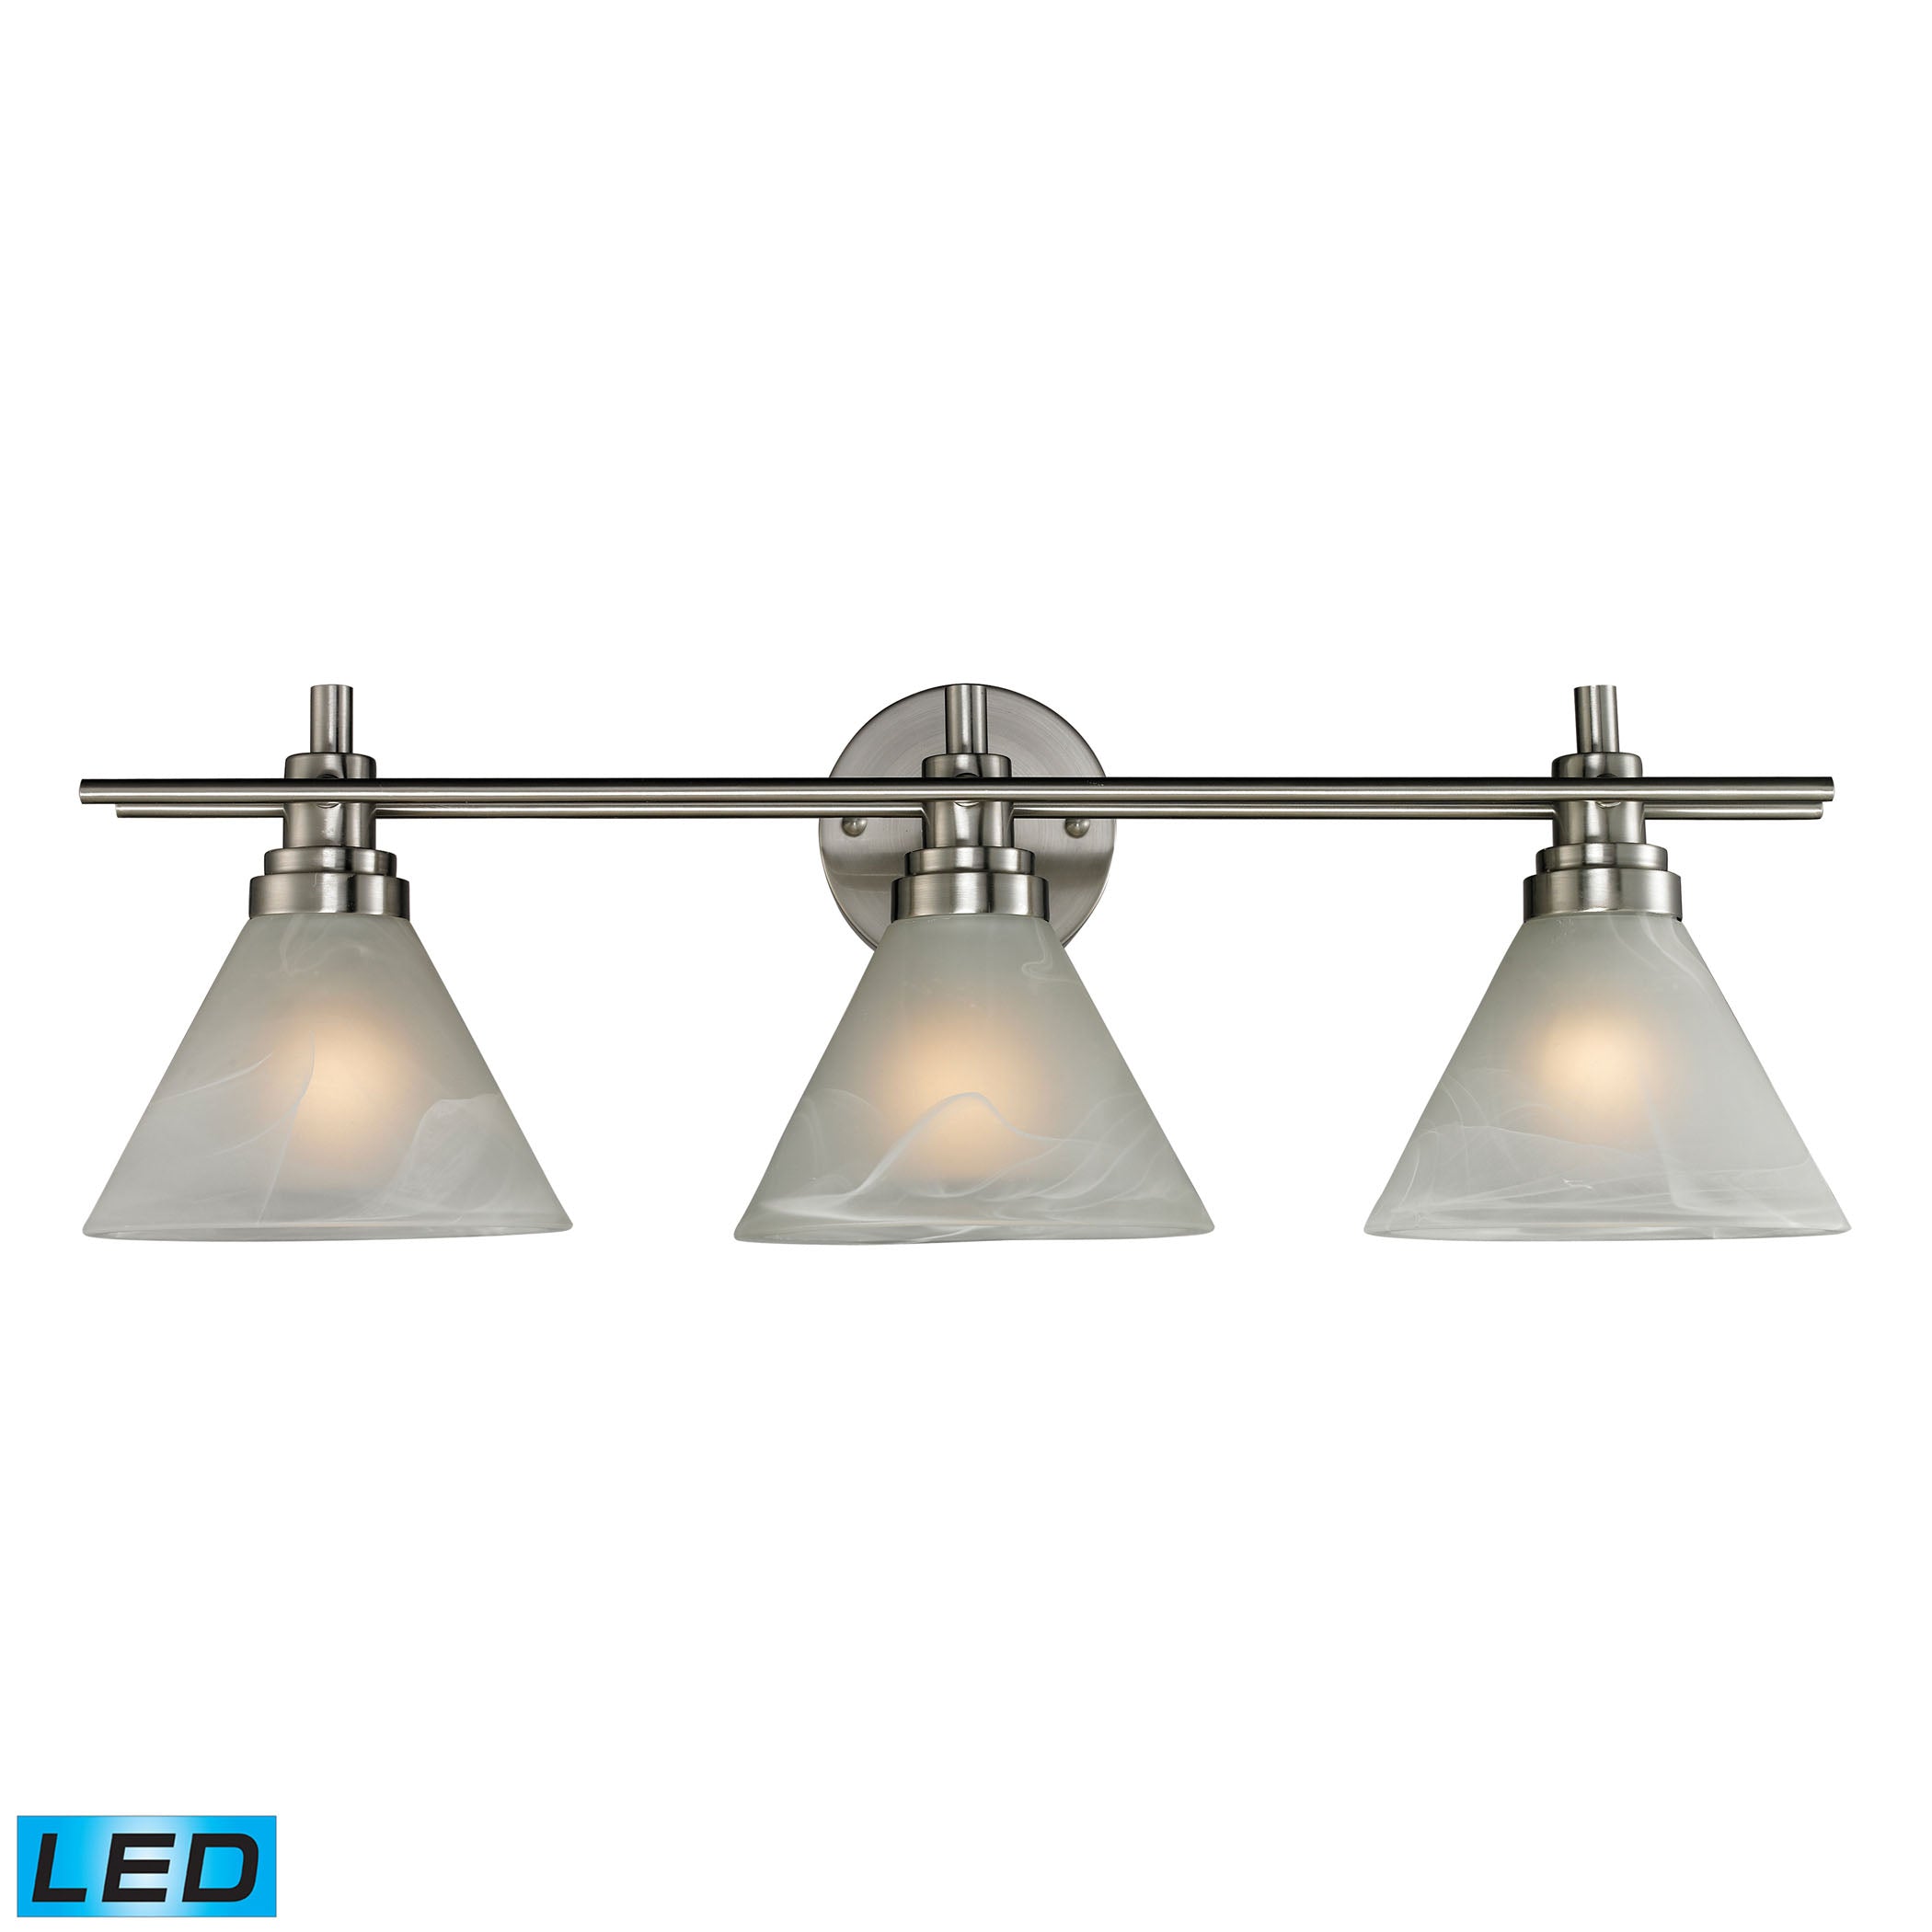 ELK Lighting 11402/3-LED Pemberton 3-Light Vanity Lamp in Brushed Nickel with White Marbleized Glass - Includes LED Bulbs